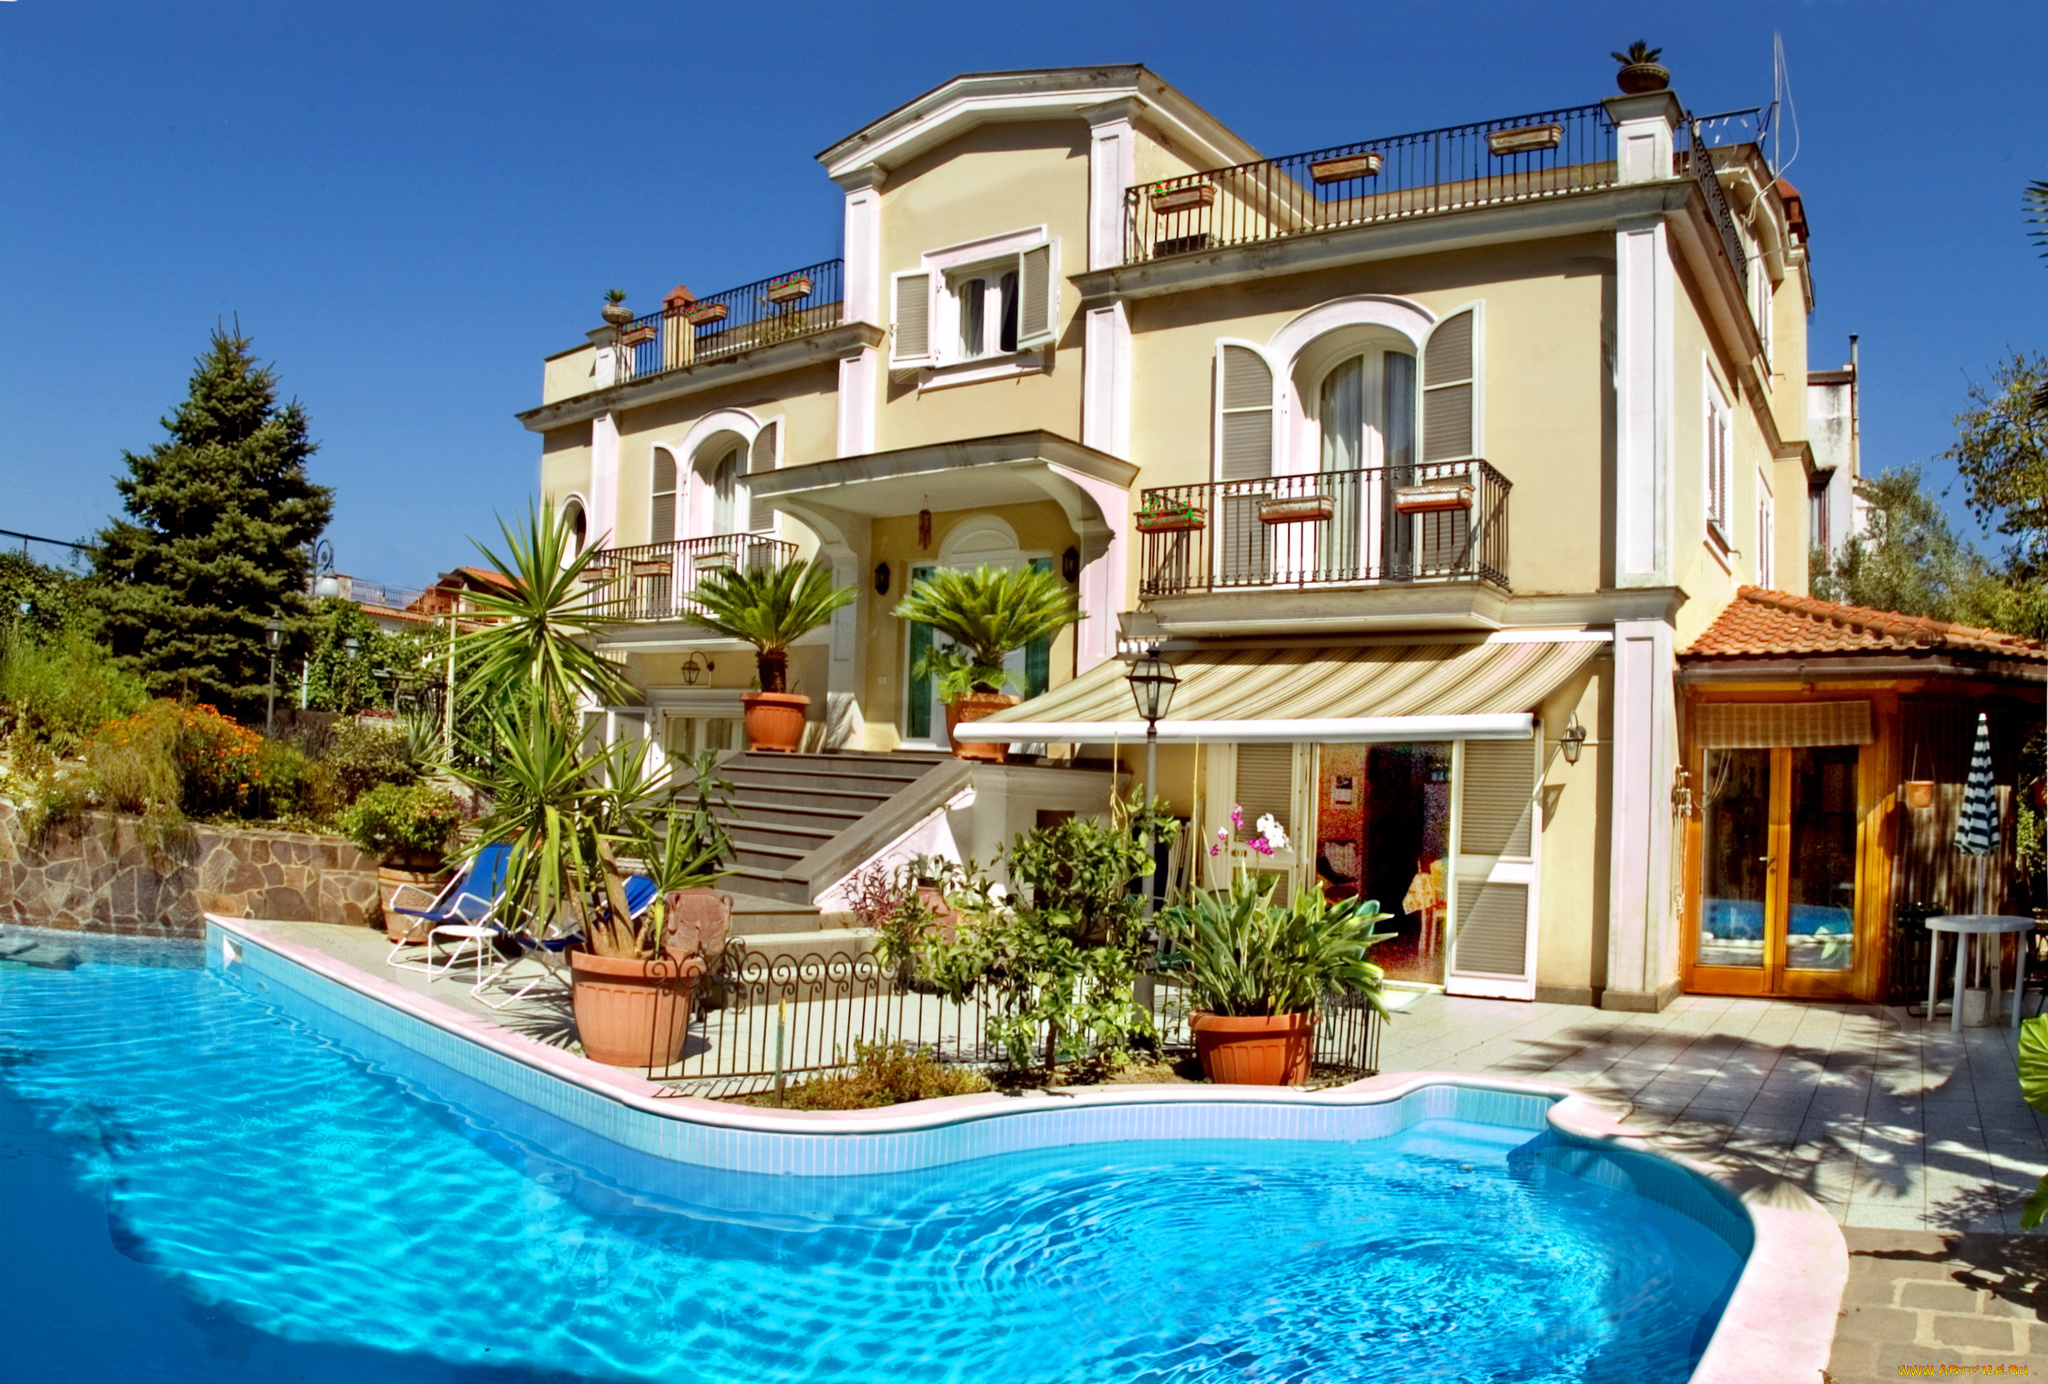 villa, adriana, guesthouse, sorrento, италия, города, здания, дома, вилла, бассейн, цветы